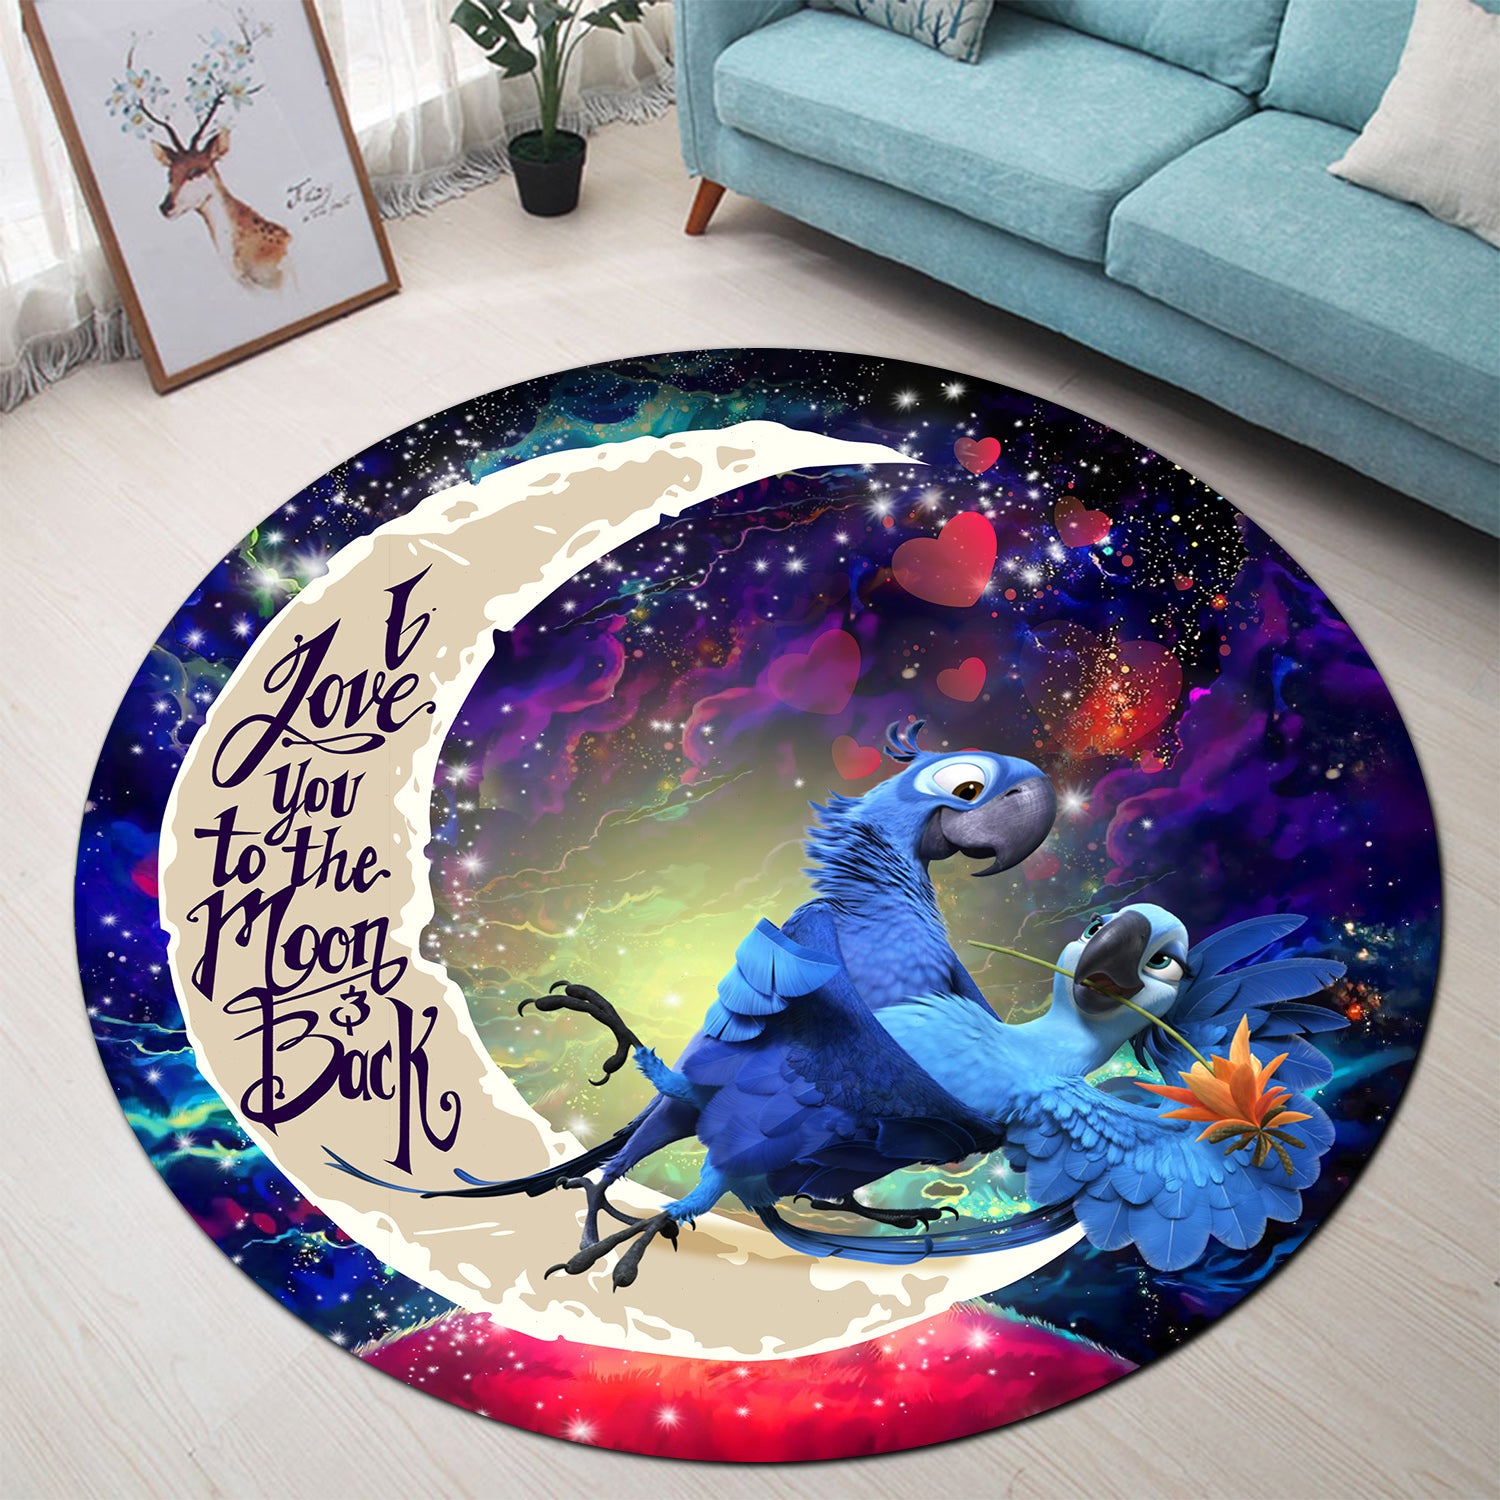 Rio Blu And Jewel Love You To The Moon Galaxy Round Carpet Rug Bedroom Livingroom Home Decor Nearkii